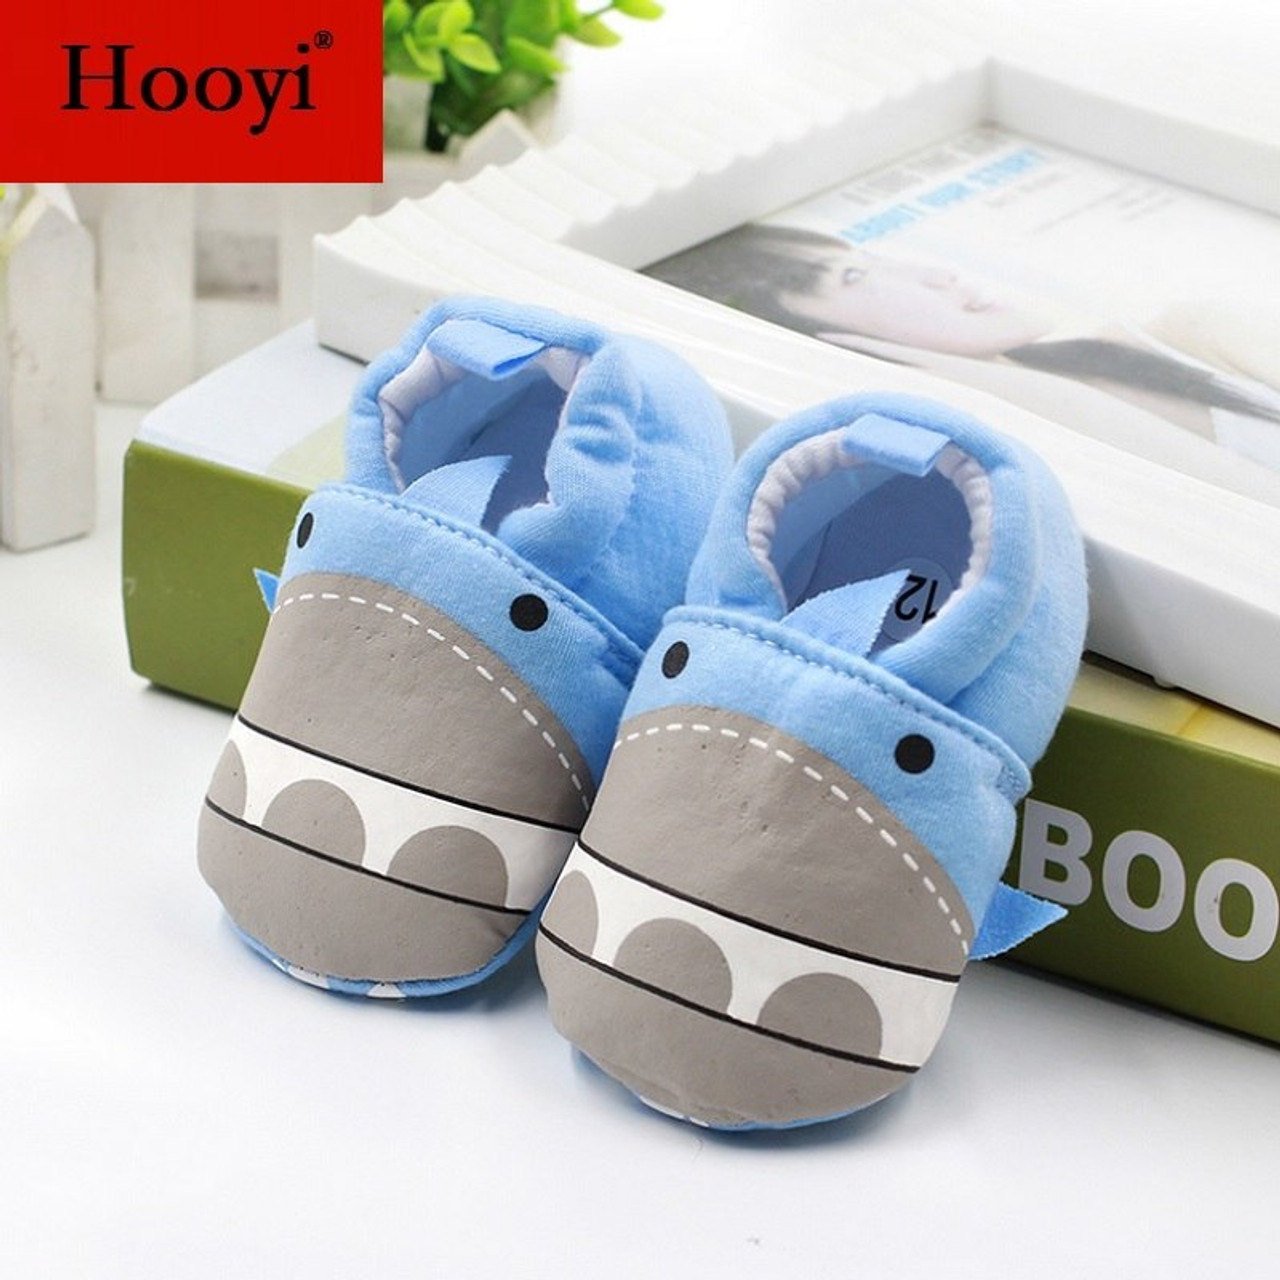 Giraffe Hooyi Baby Boy Shoes Anti-Slip 